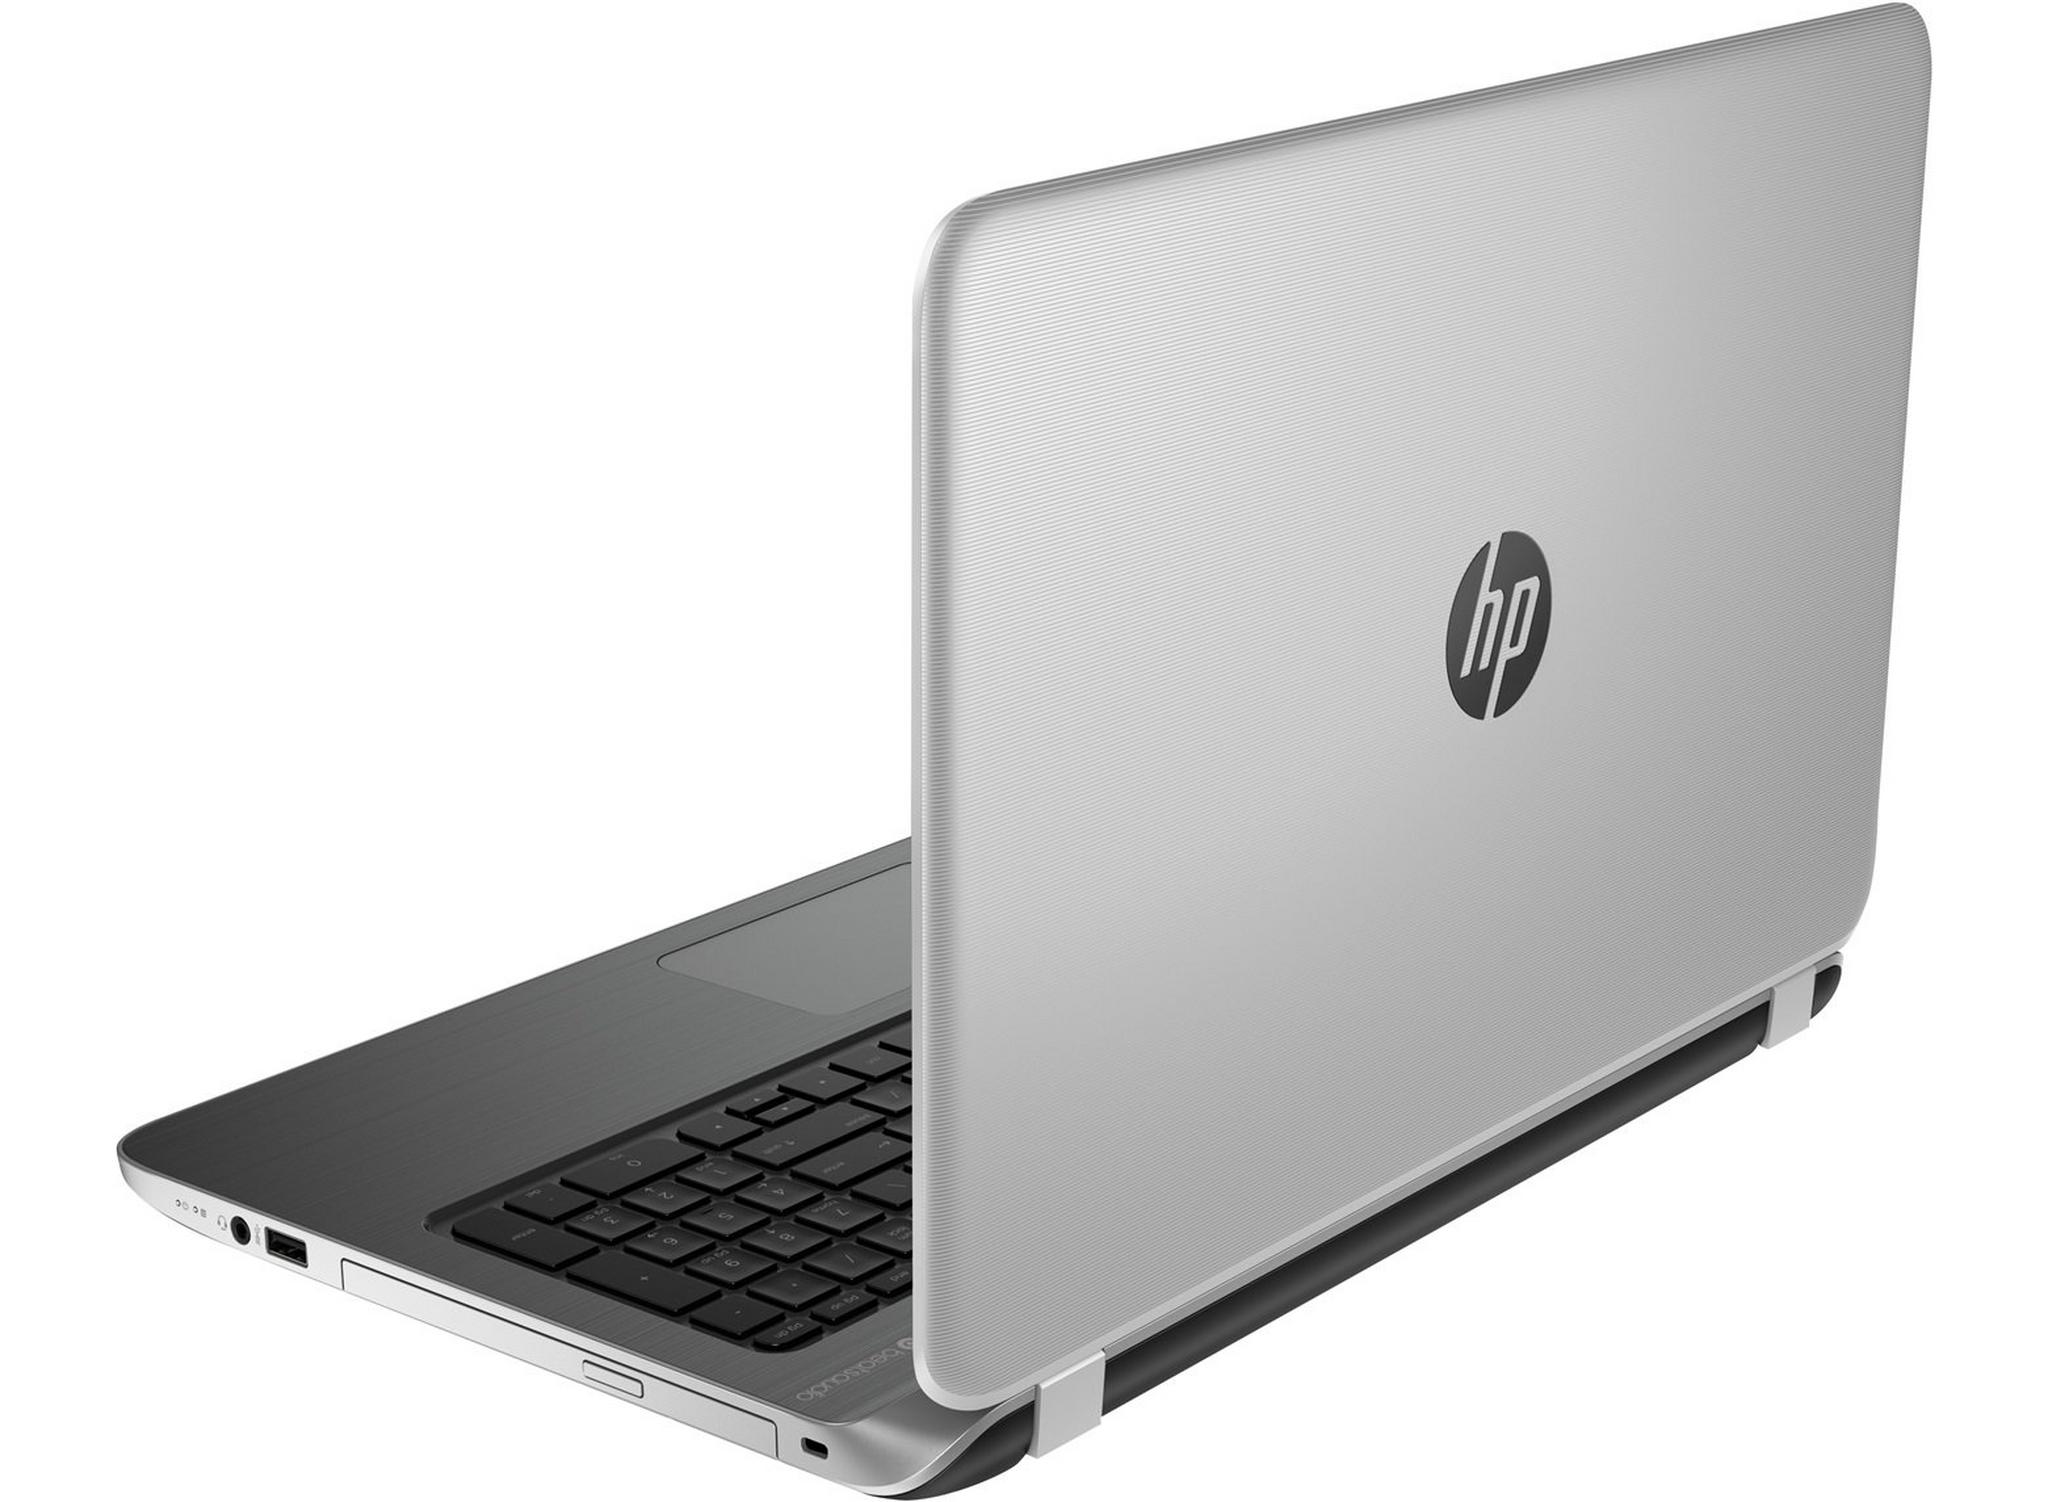 HP Pavilion Core i7 16GB RAM 1TB HDD 15.6-inch Laptop - Silver